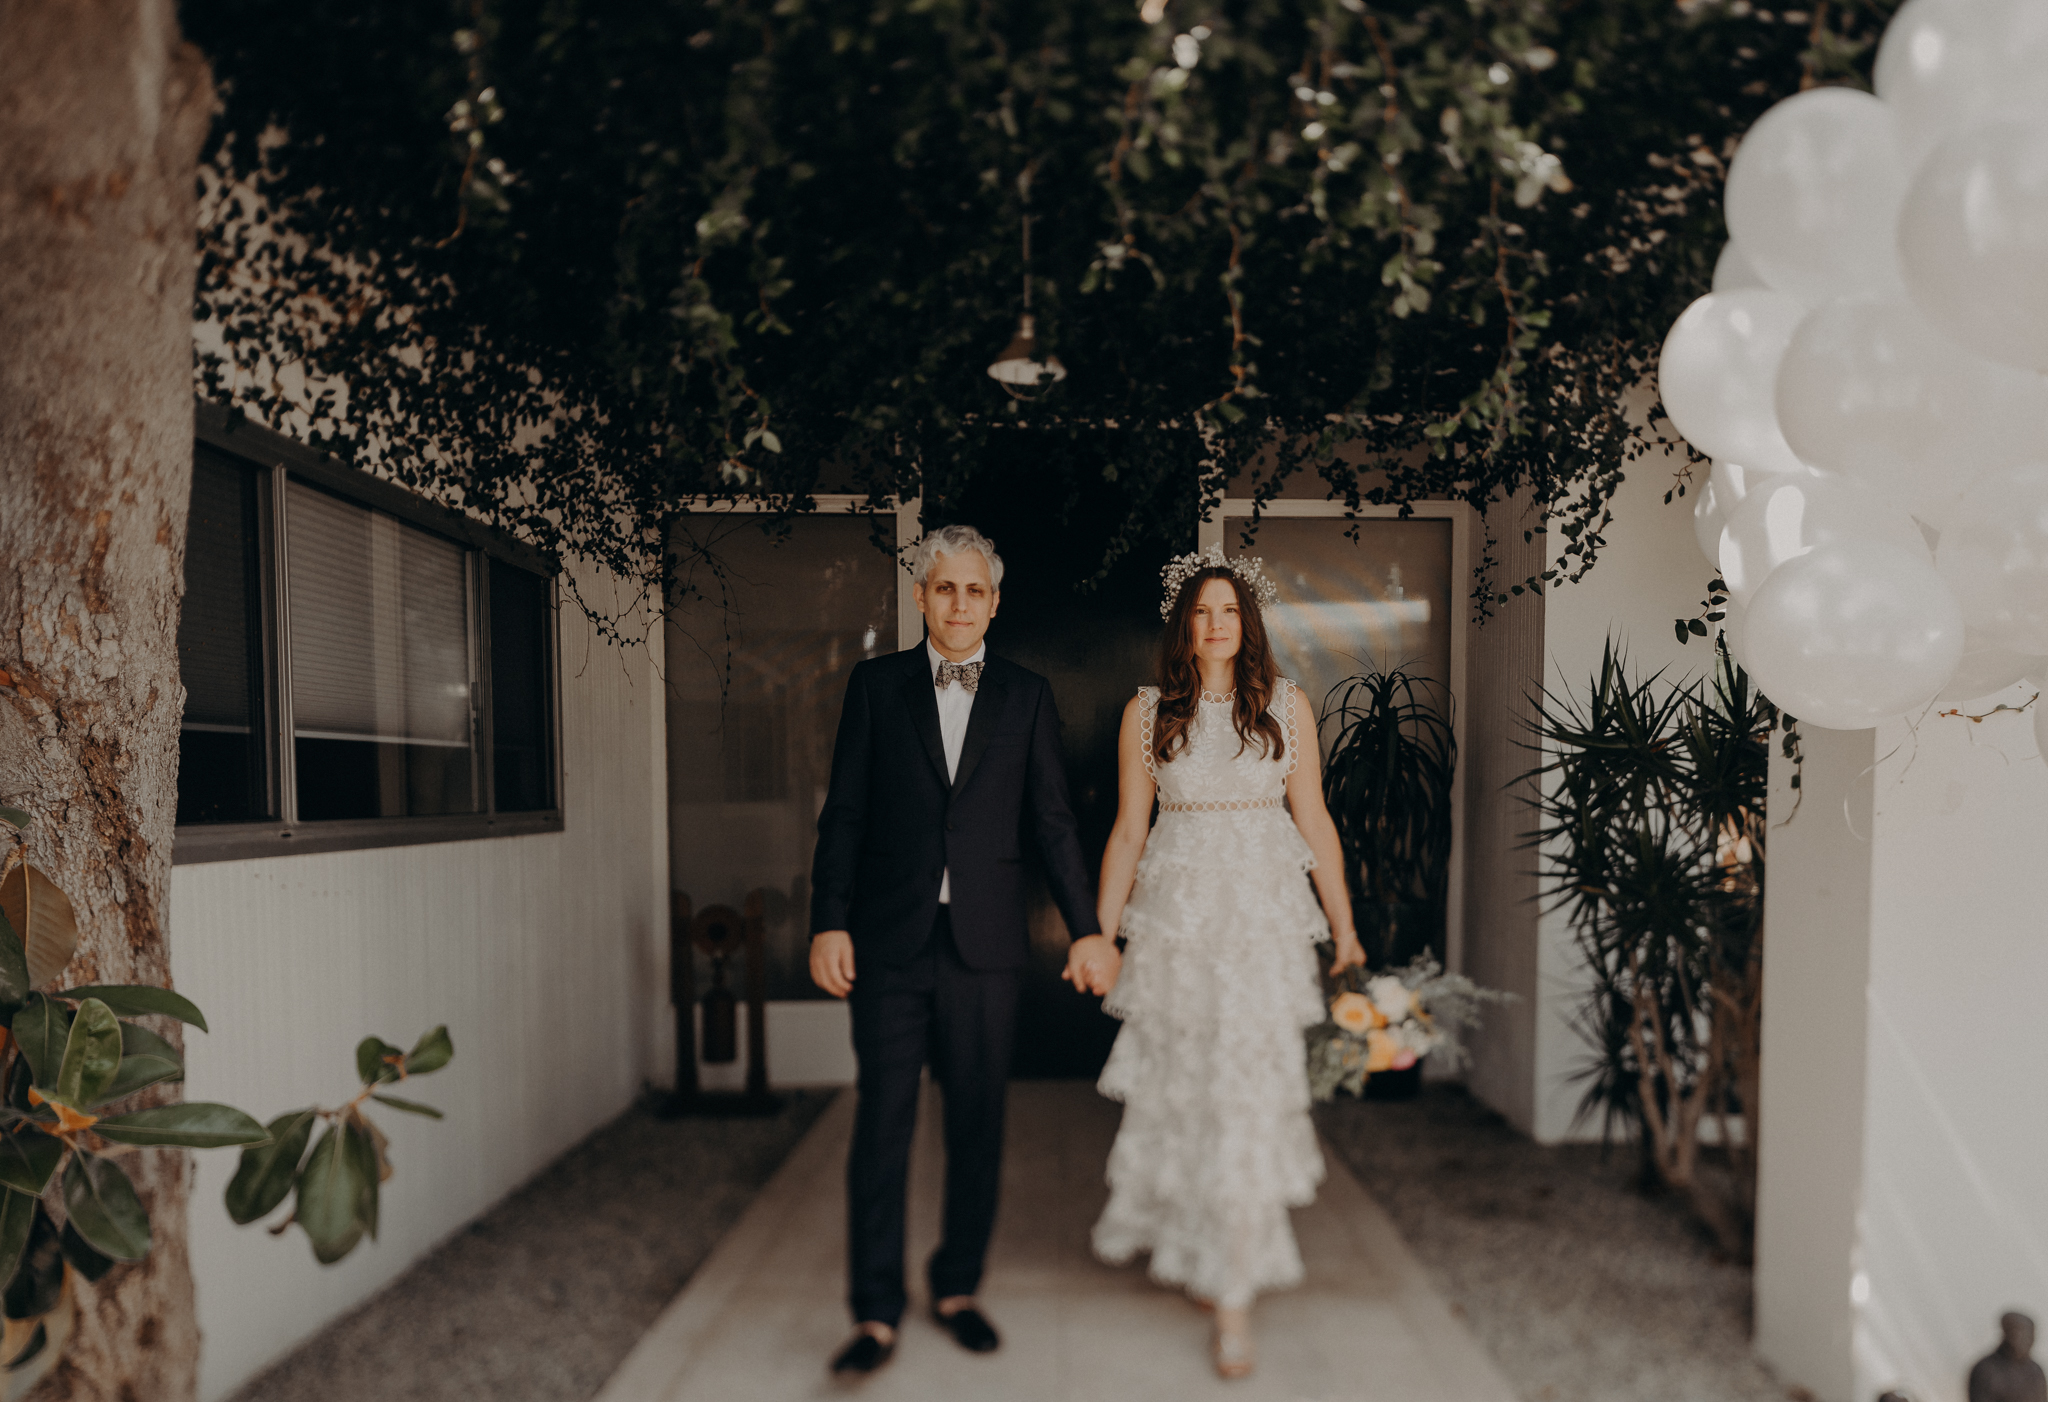 Isaiah + Taylor Photography - Private Estate Backyard Wedding - Beverly Hills - Los Angeles Wedding Photographer - 21.jpg